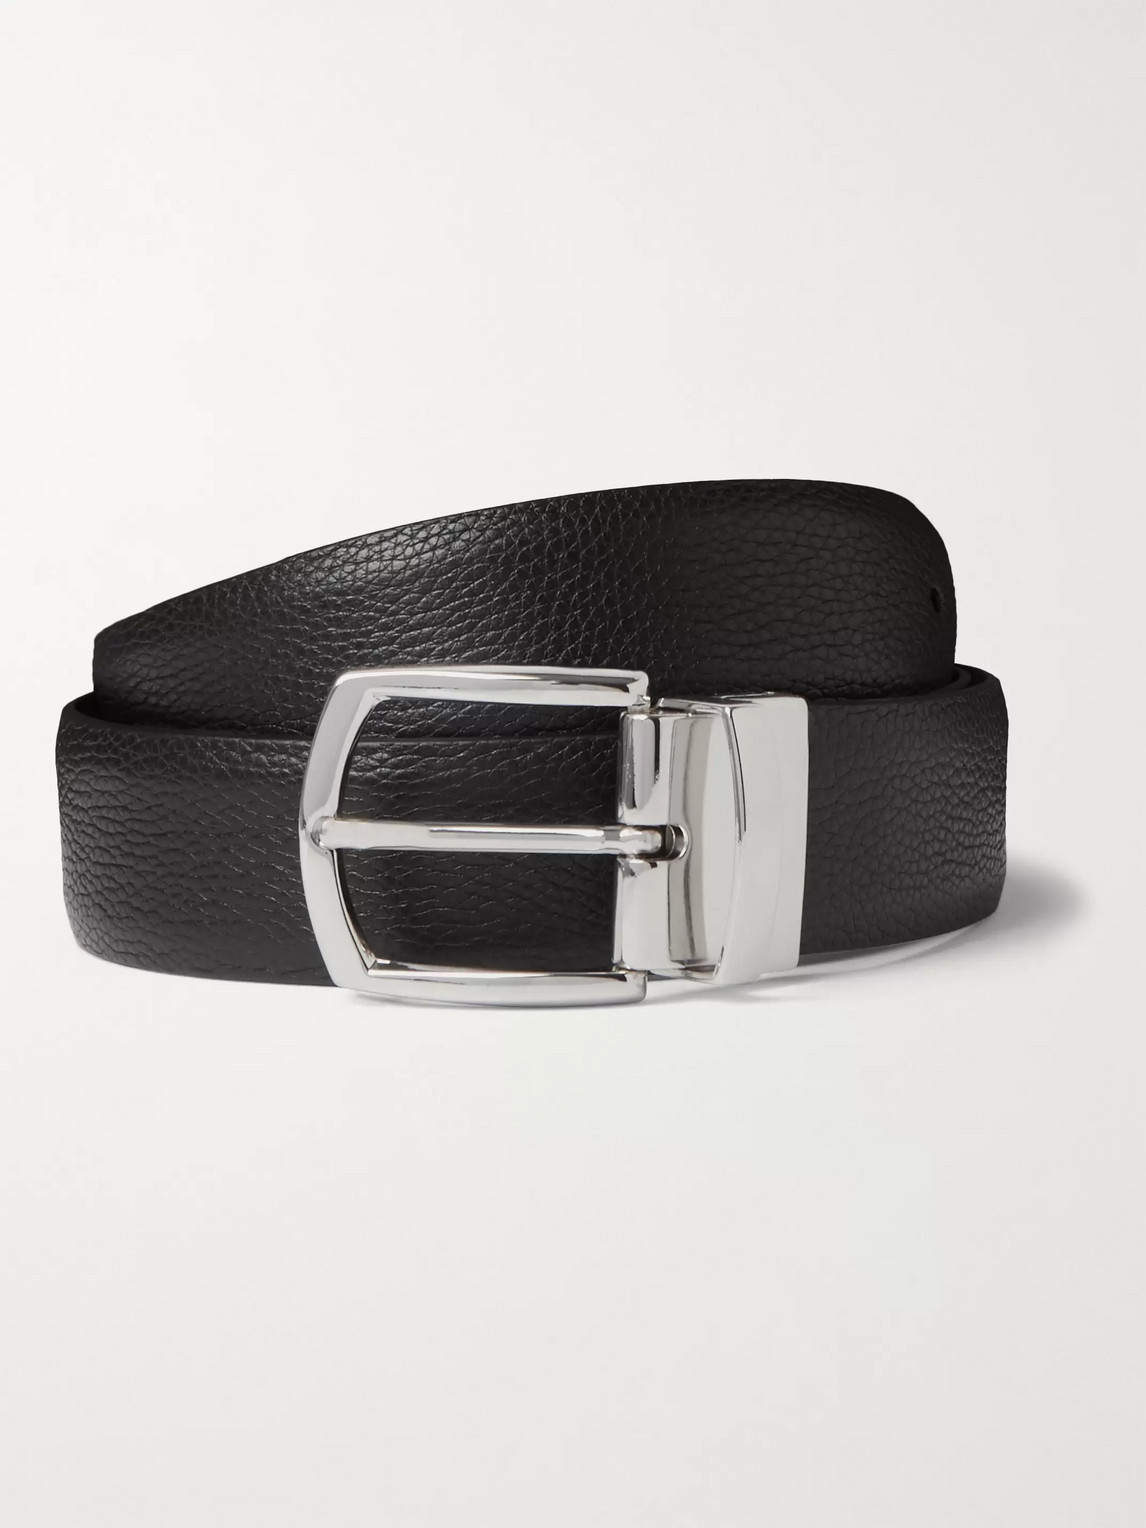 Anderson's 3.5cm Full-grain Leather Belt In Black